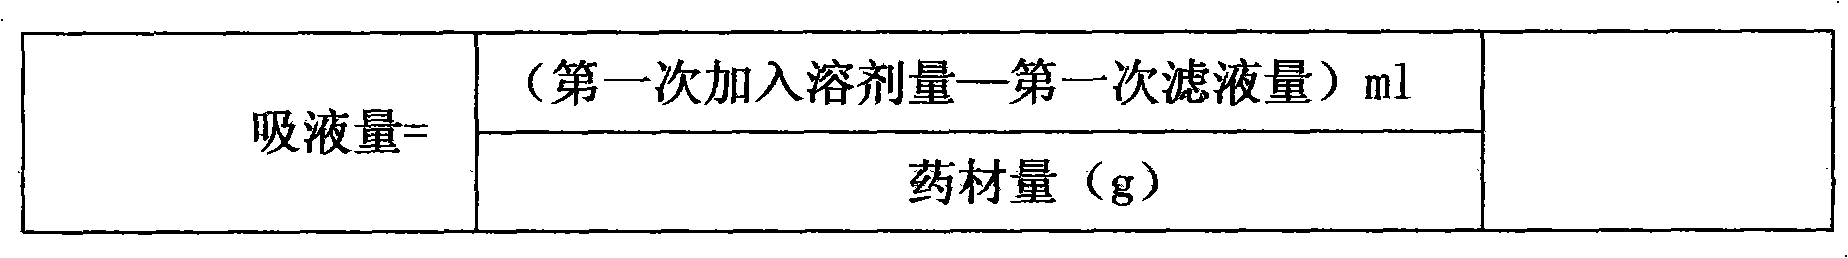 Method for preparing Yixinshu tablets